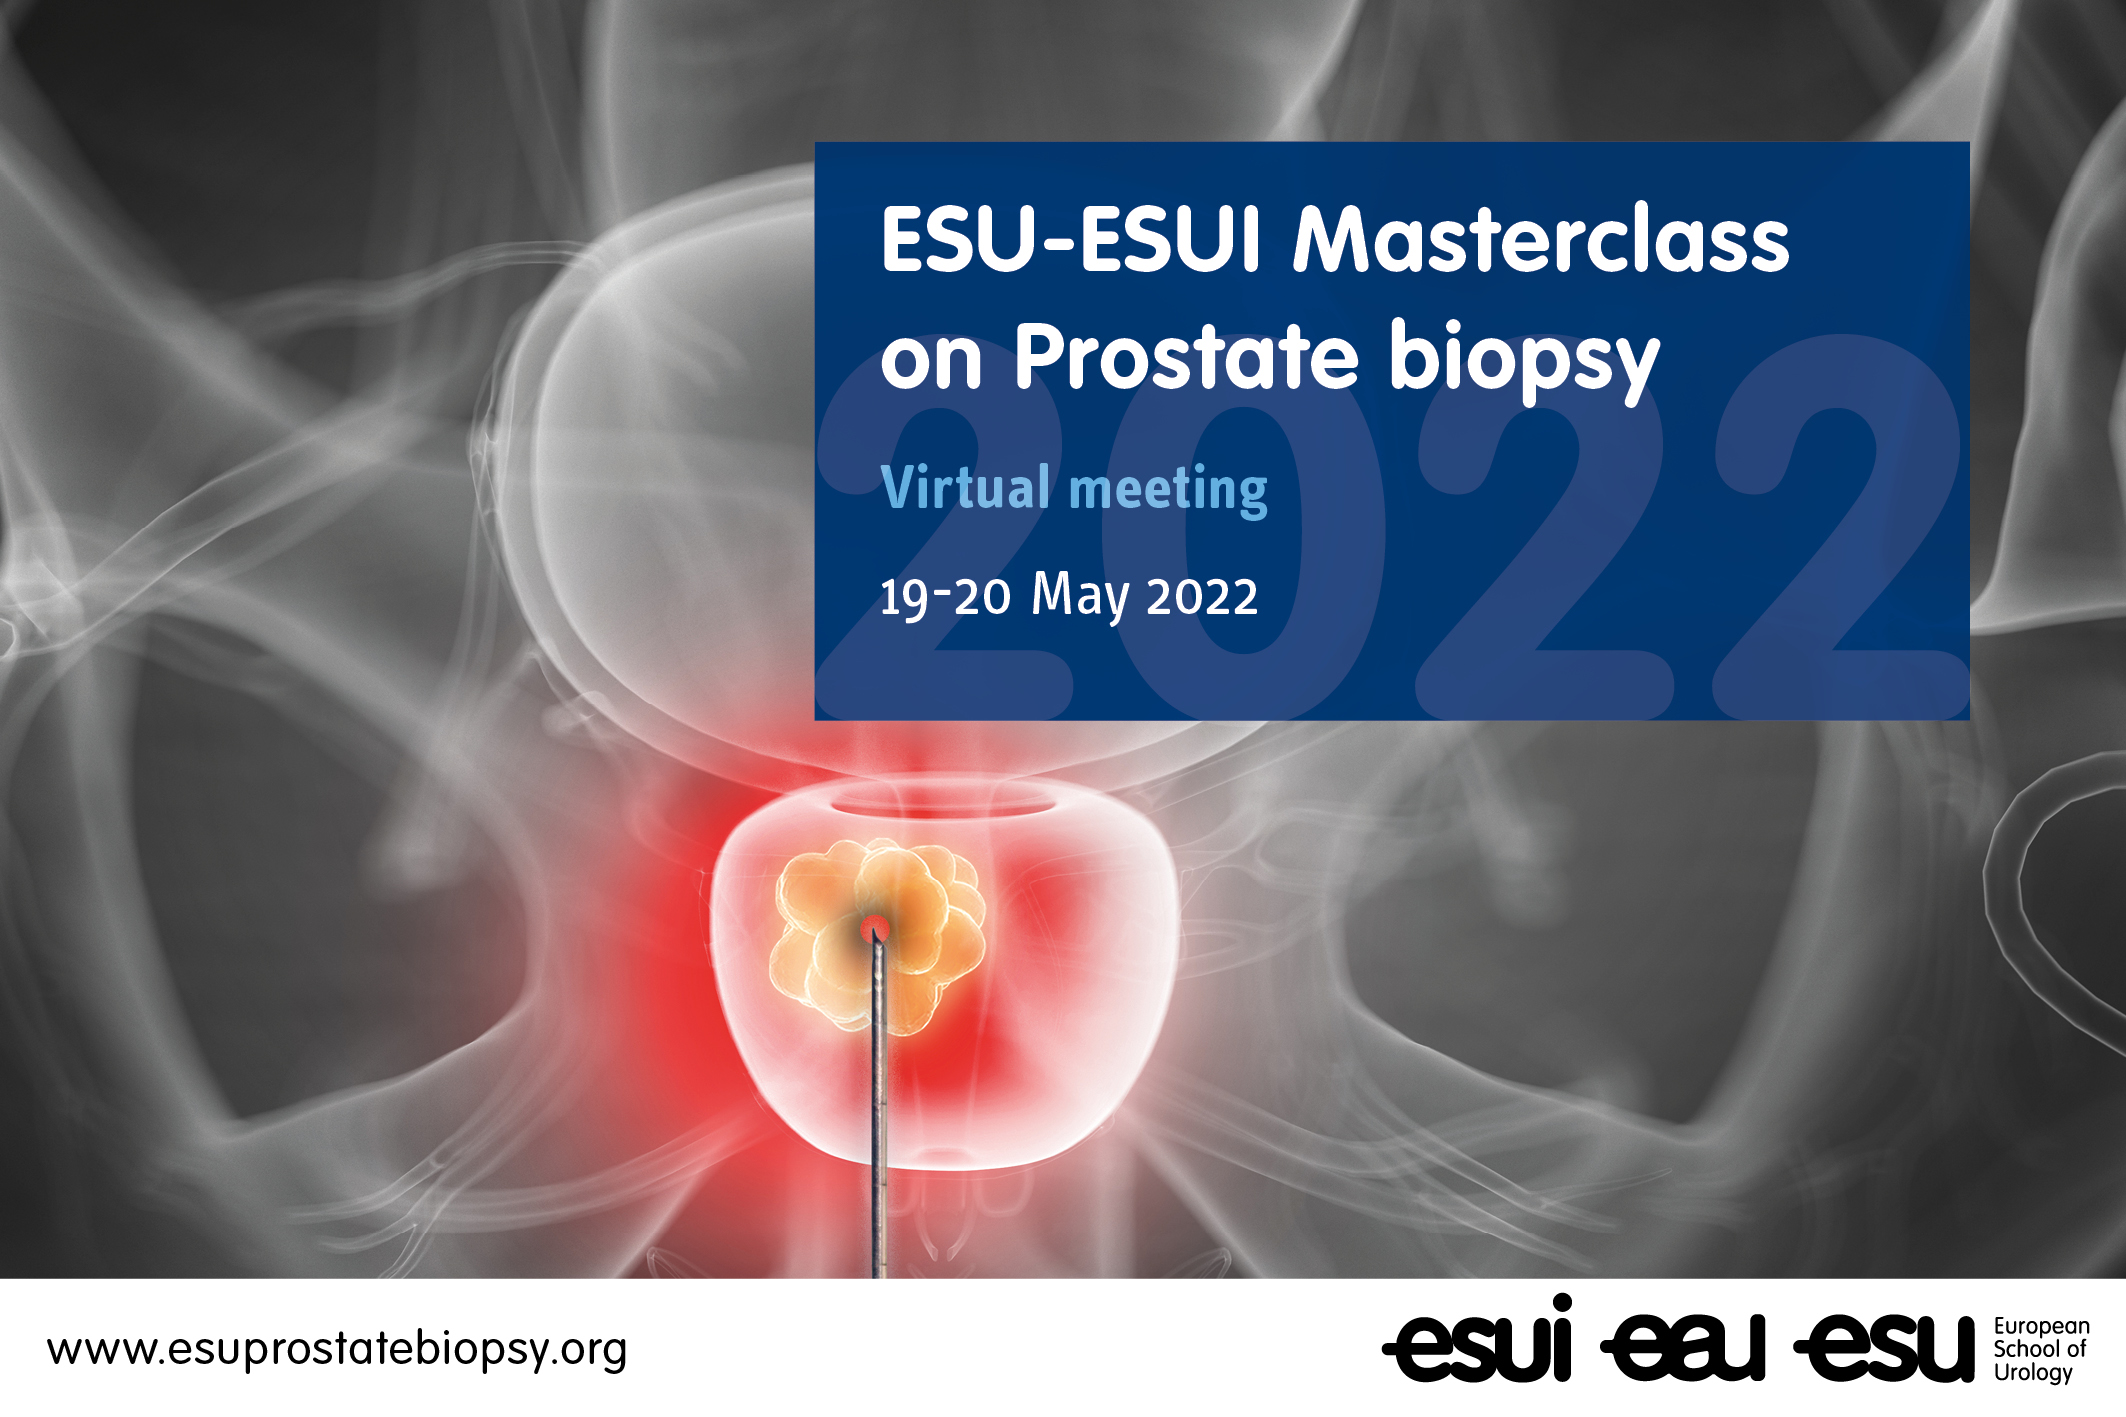 ESU-ESUI masterclass on prostate biopsy